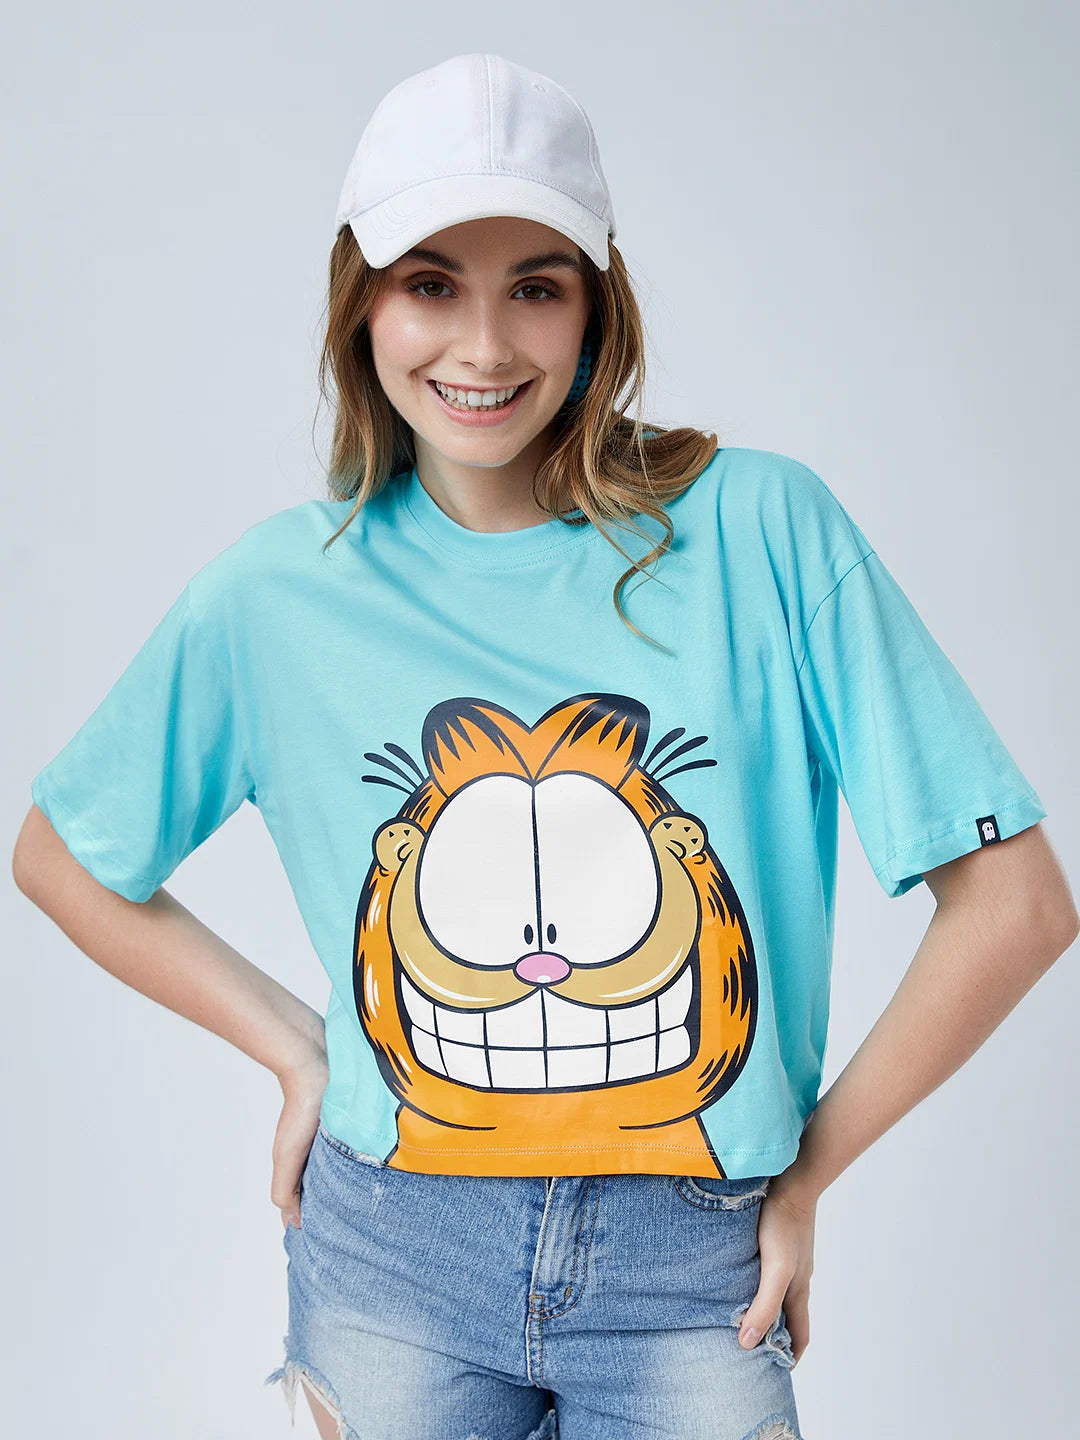 Garfield Face (UK version)